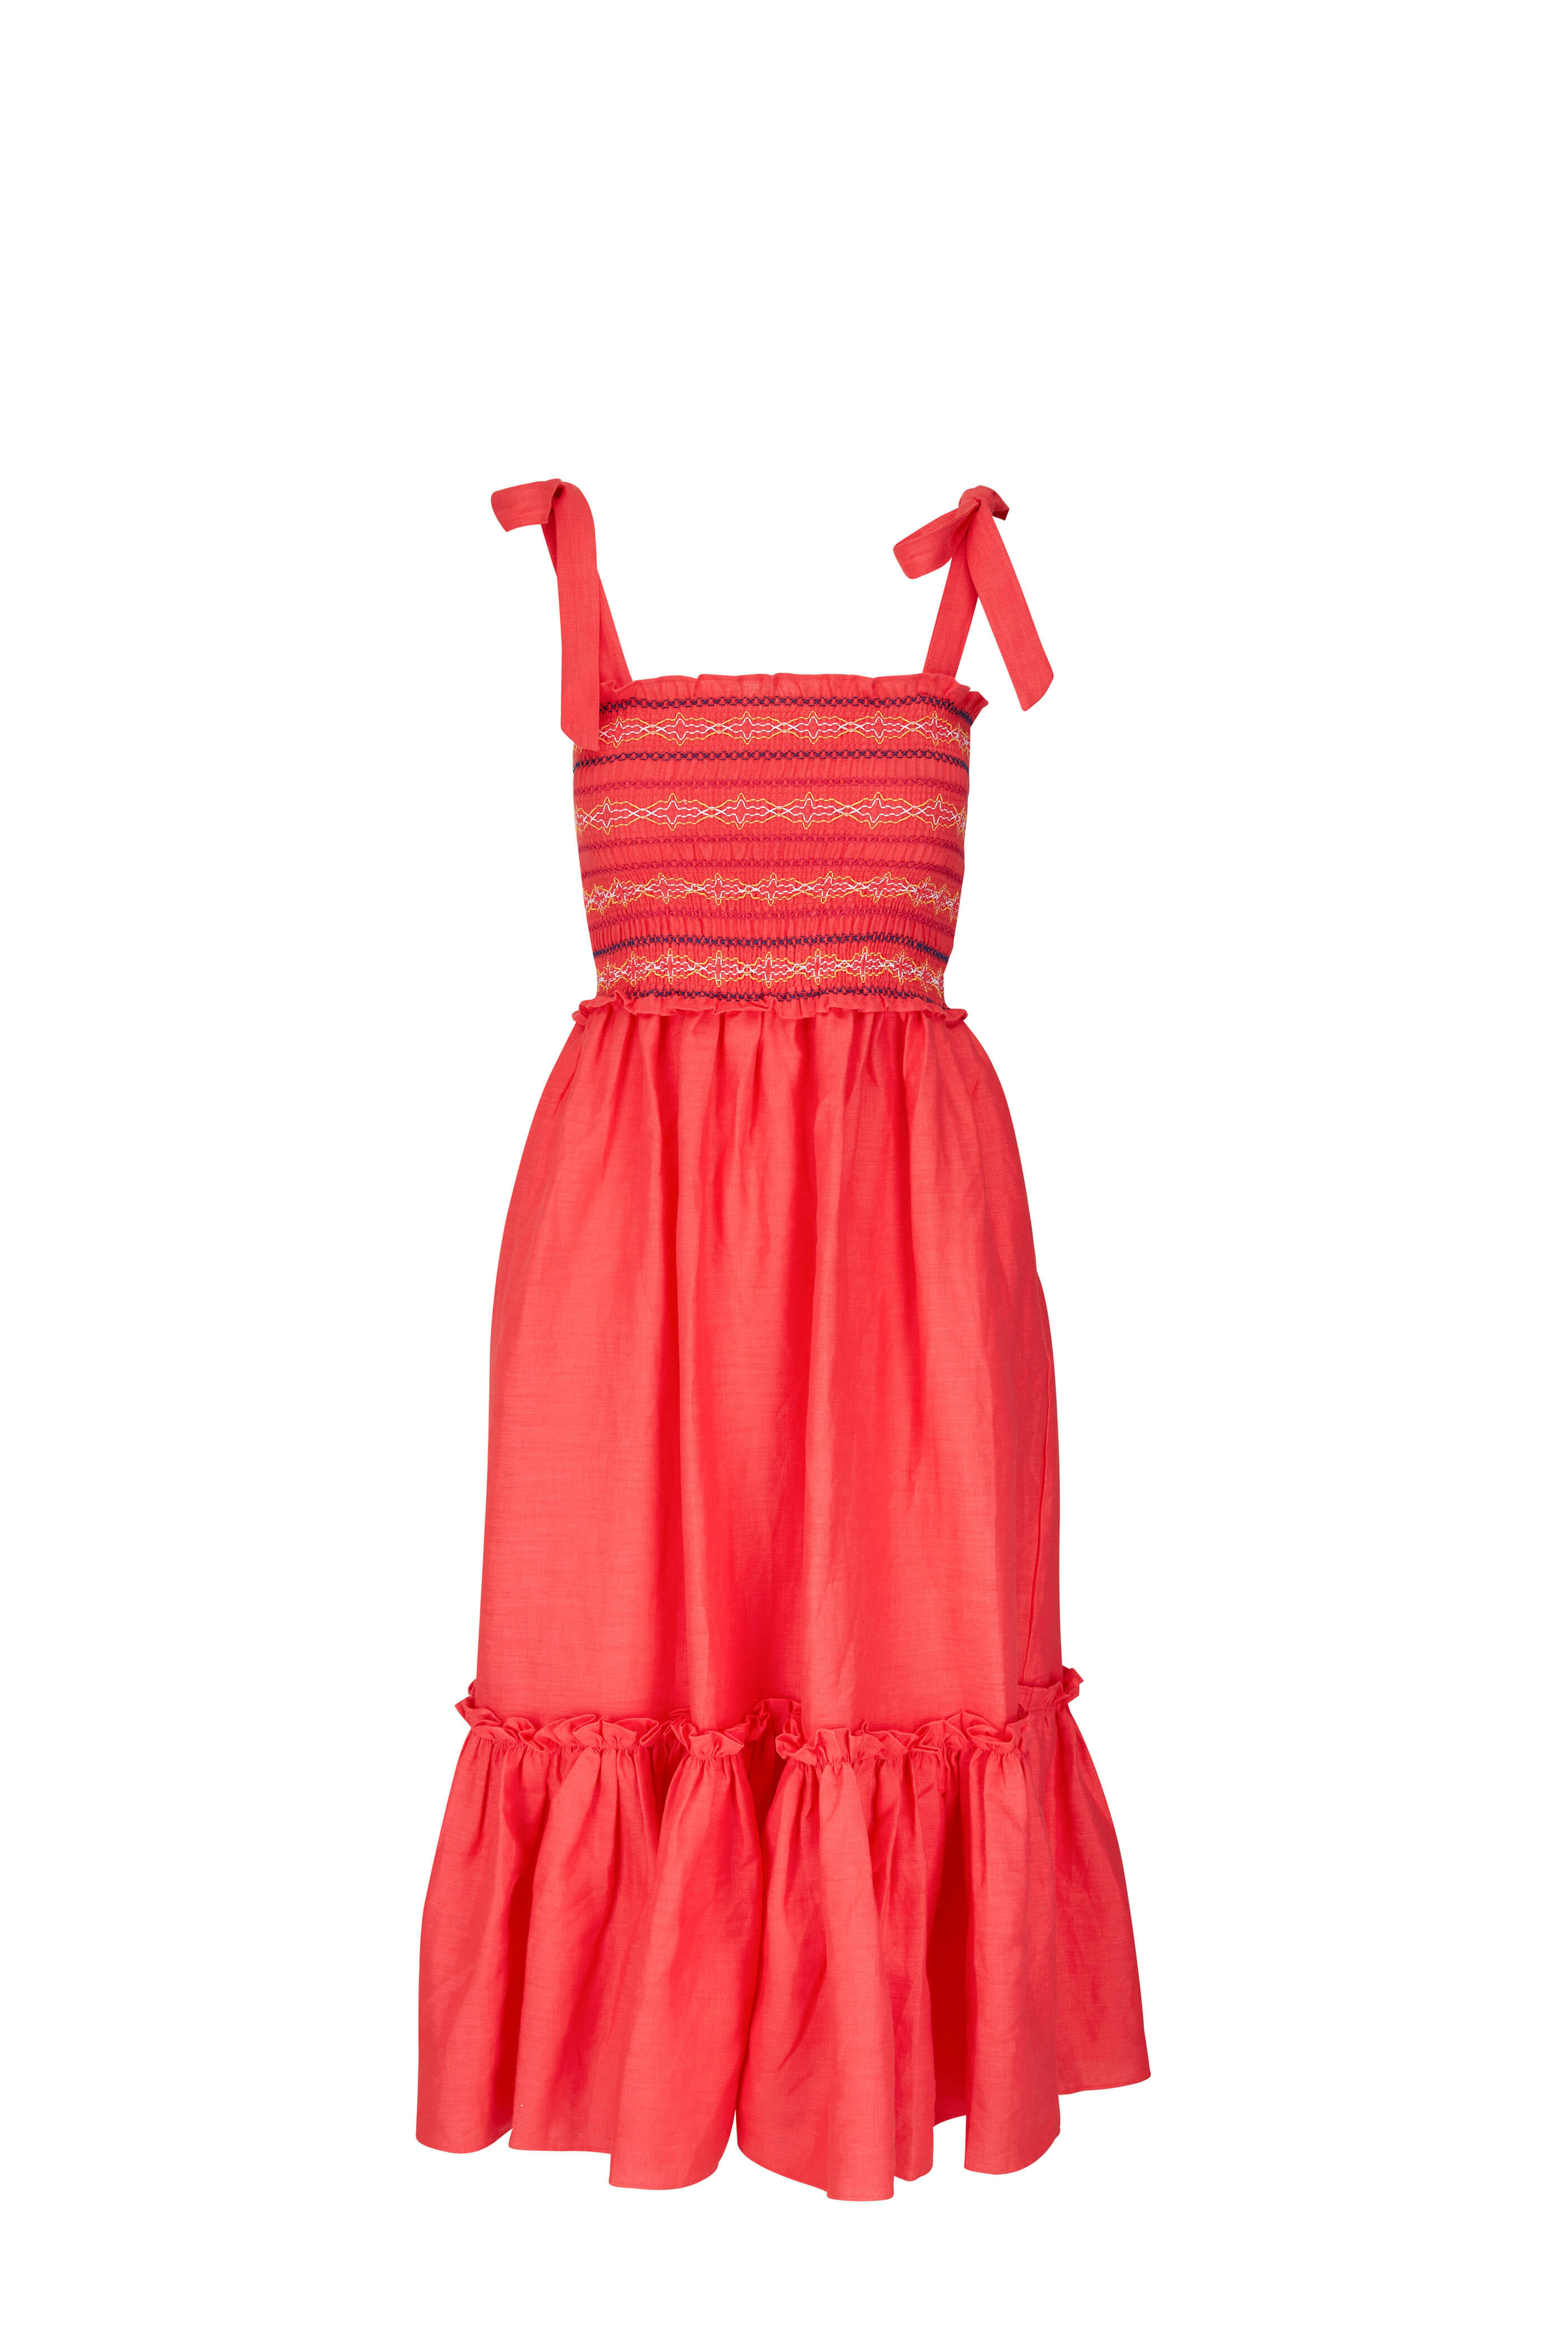 Cara Cara - Jenny Hibiscus Midi Dress | Mitchell Stores